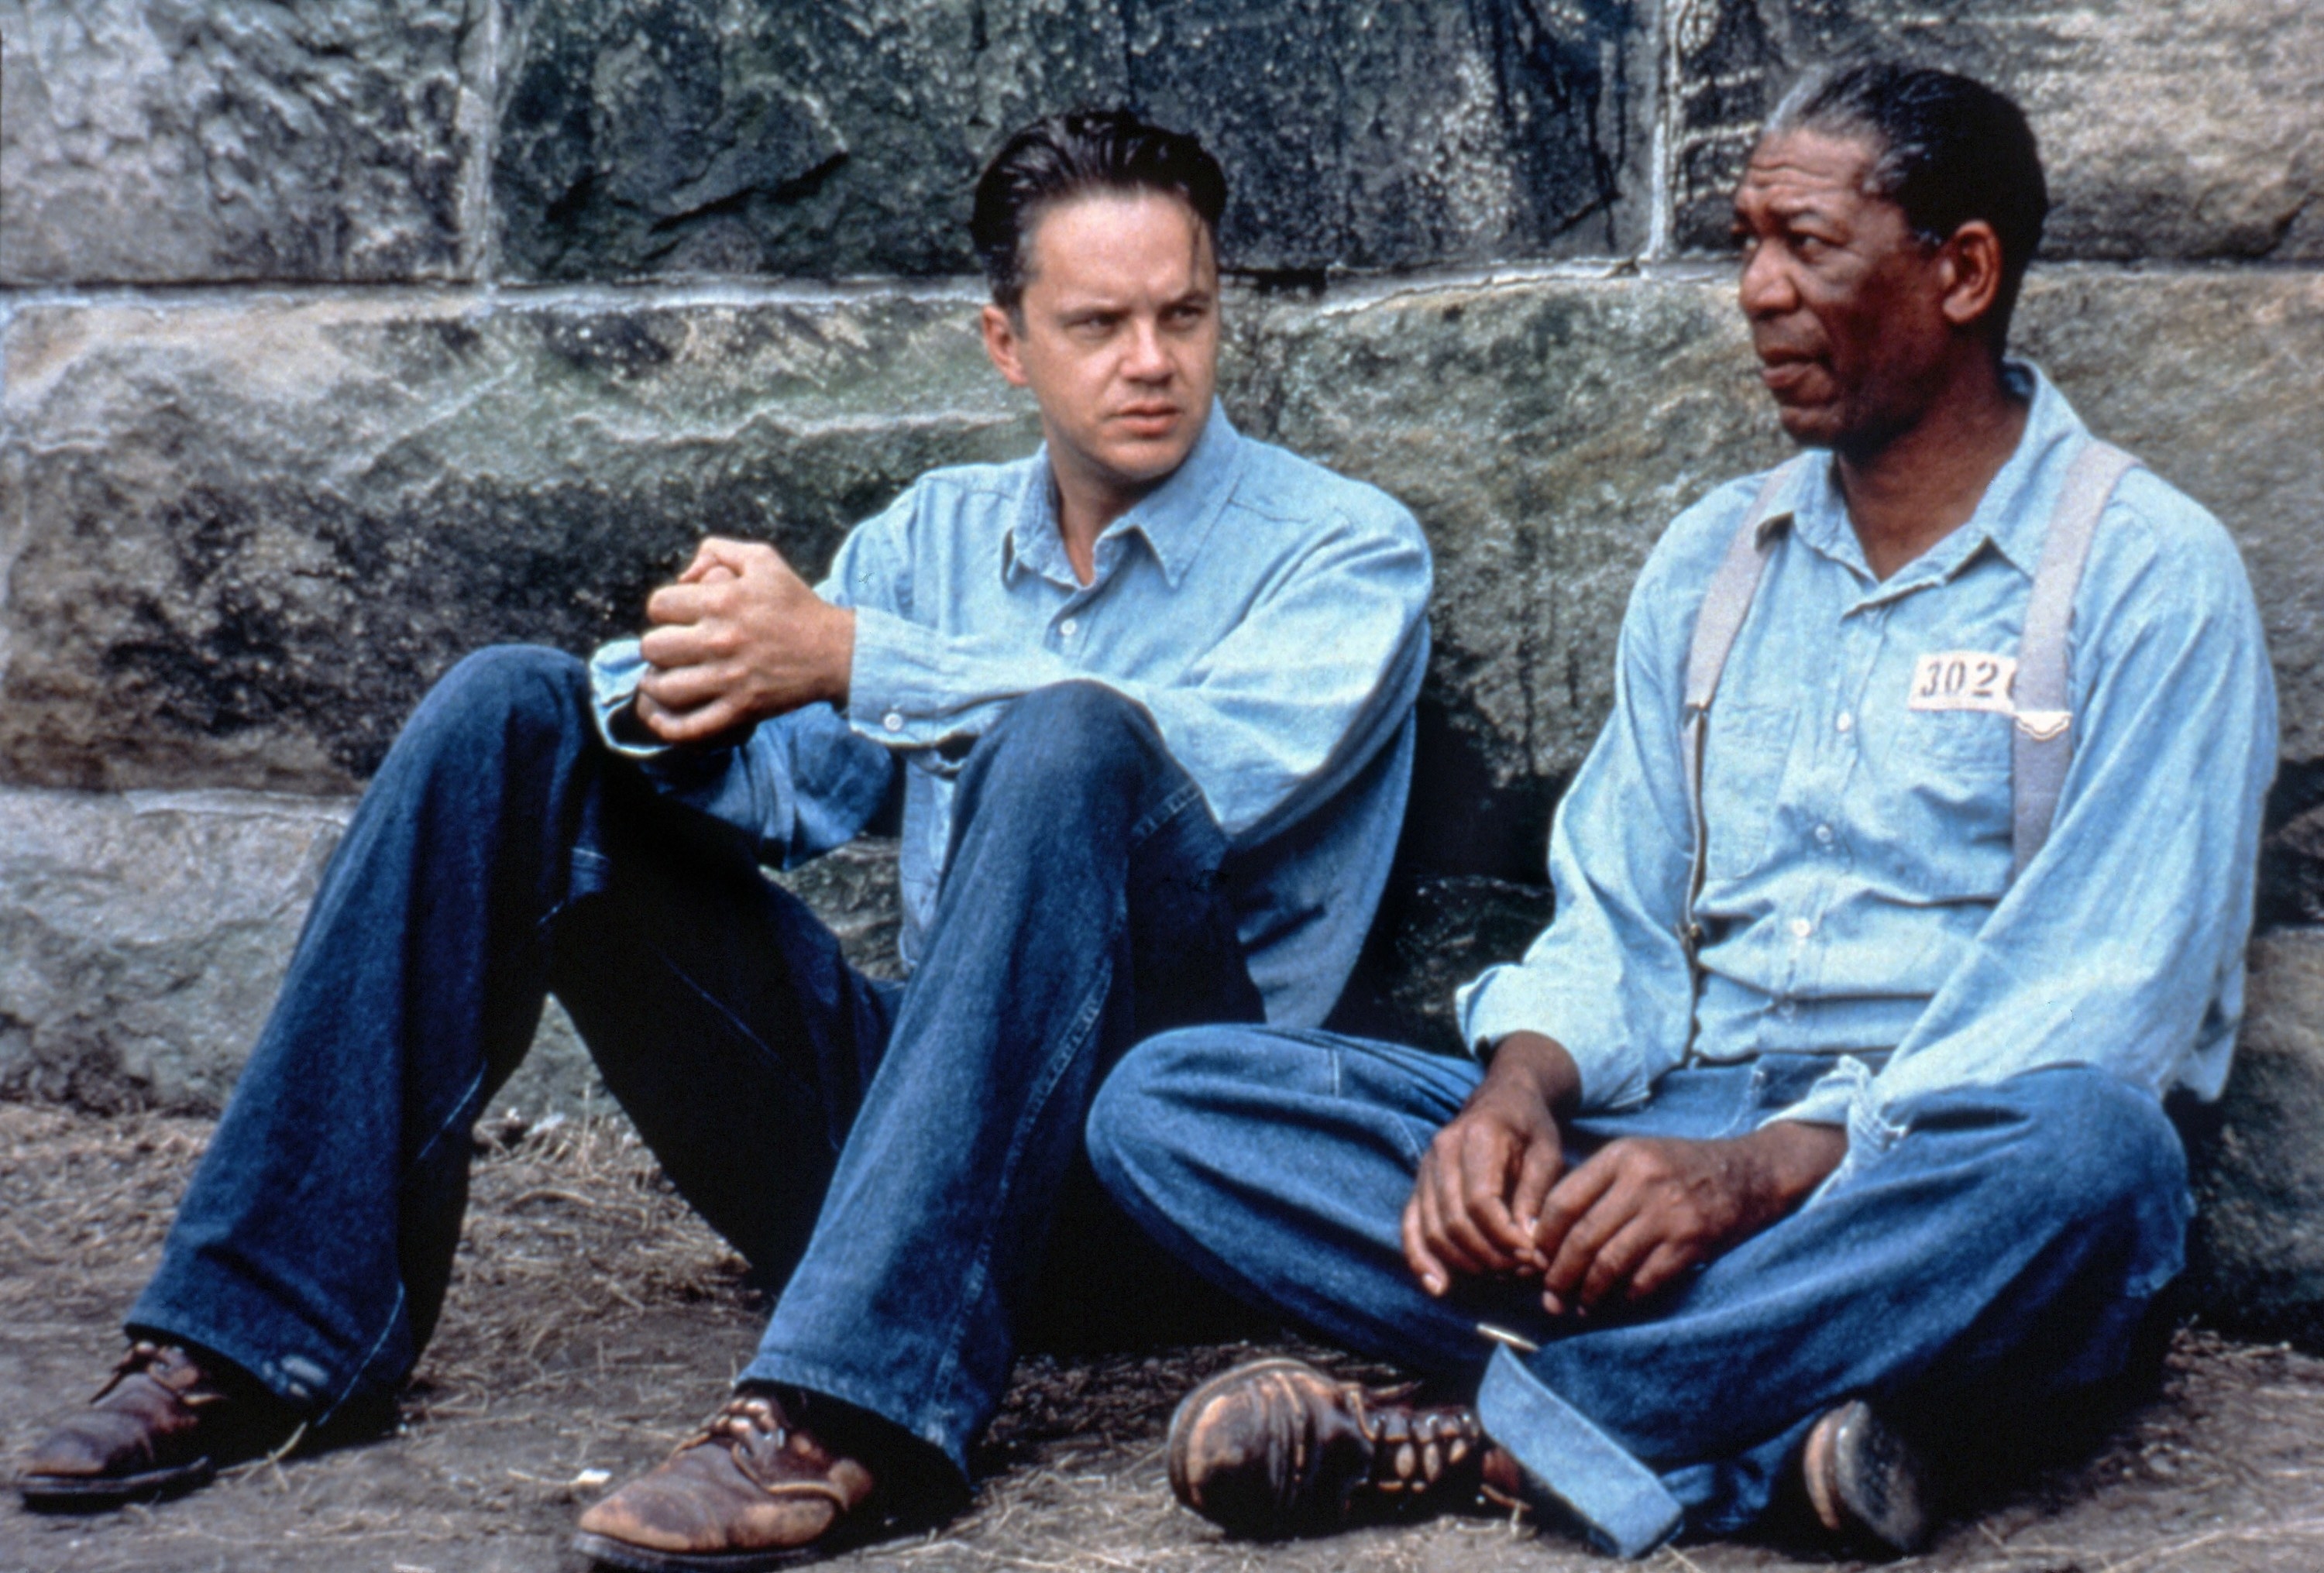 Morgan Freeman and Tim Robbins in prison uniform